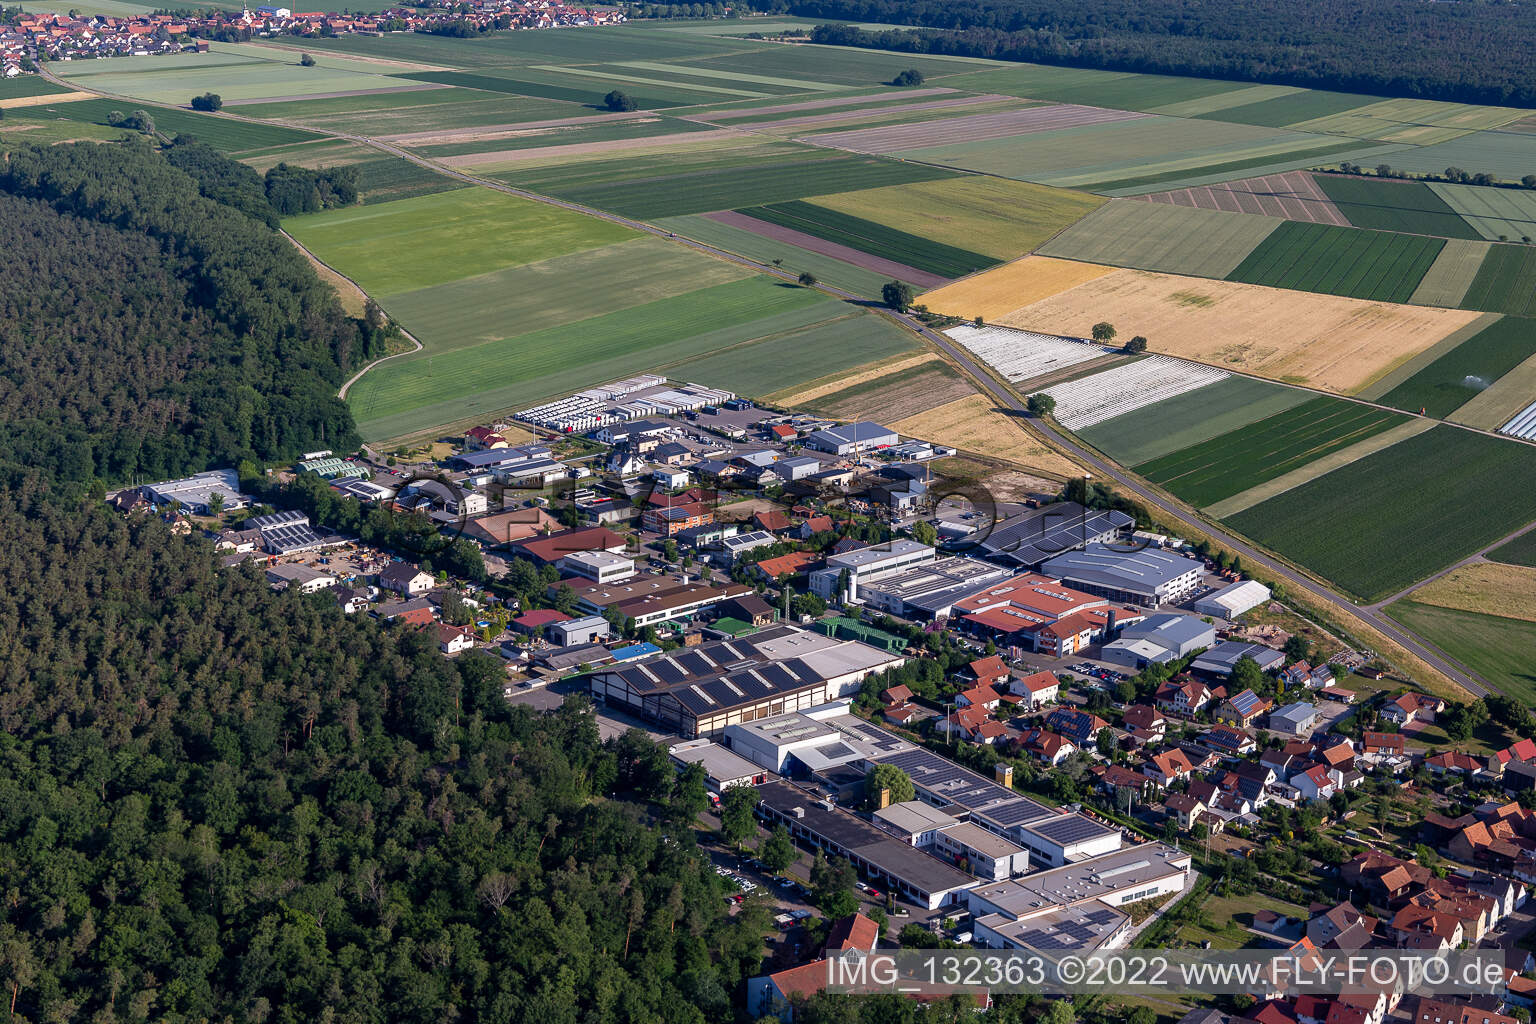 Industrial area Im Gereut in Hatzenbühl in the state Rhineland-Palatinate, Germany